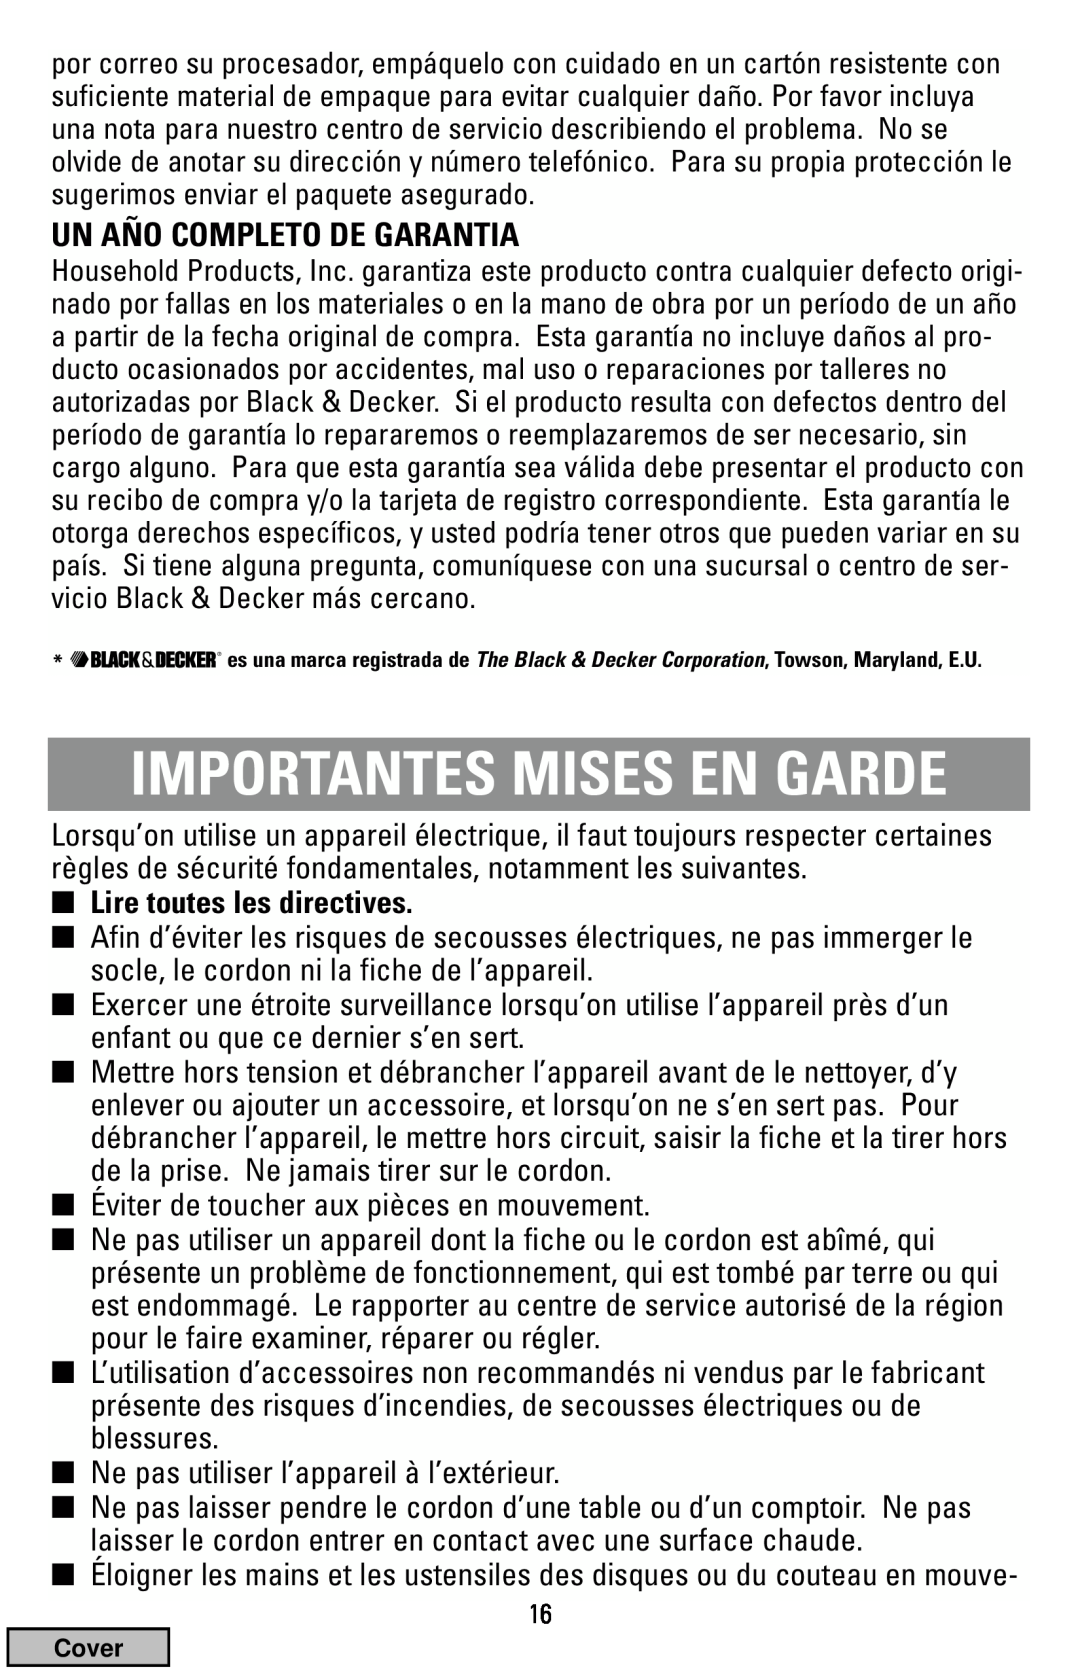 Black & Decker FP1200 manual Importantes Mises En Garde, Un Año Completo De Garantia, Lire toutes les directives 